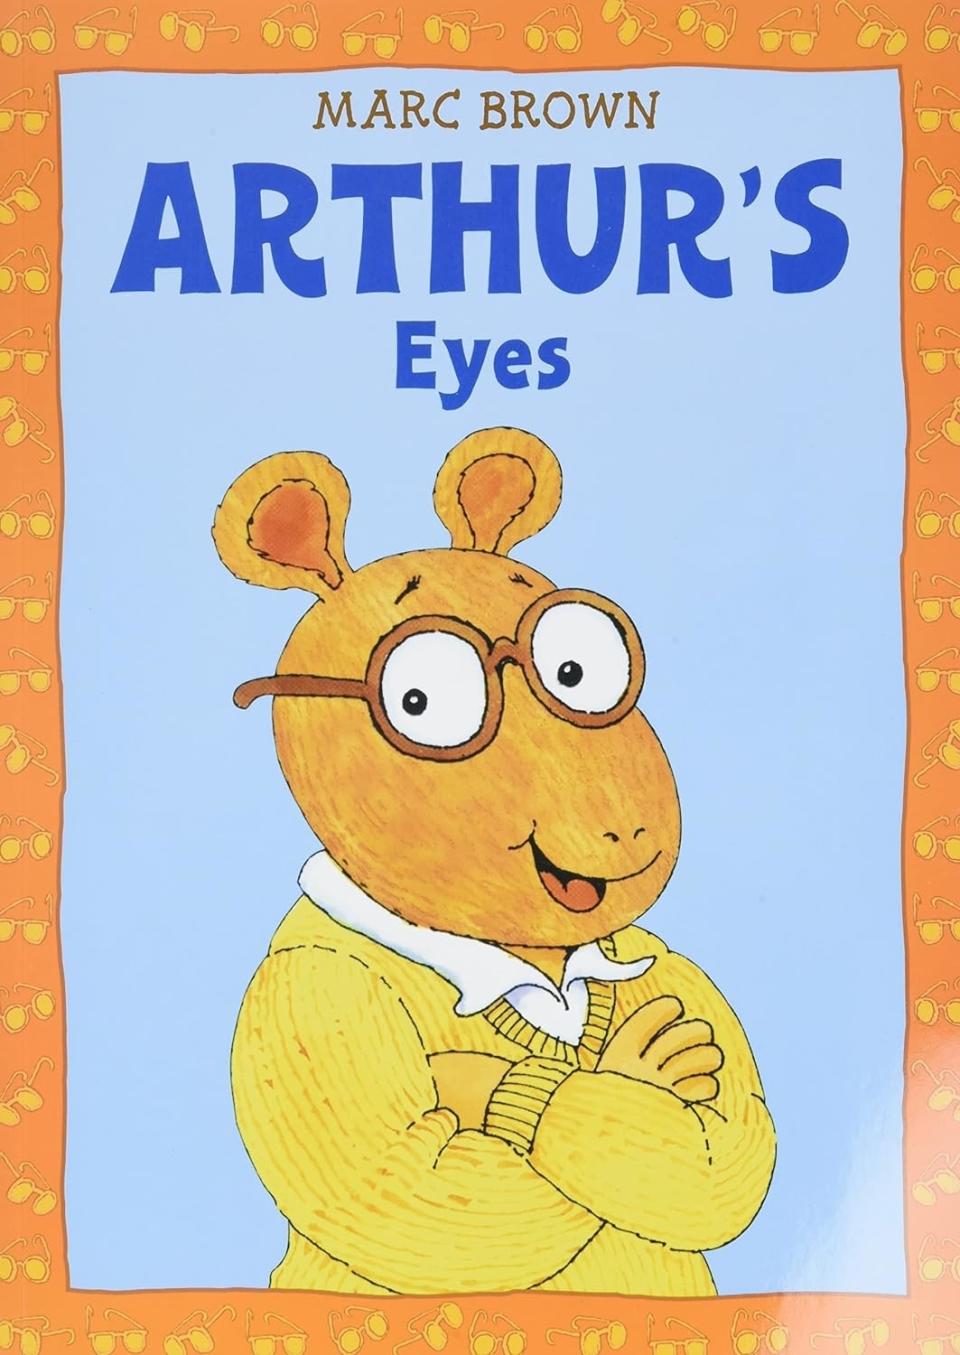 Cover of "Arthur's Eyes" book by Marc Brown featuring Arthur the aardvark